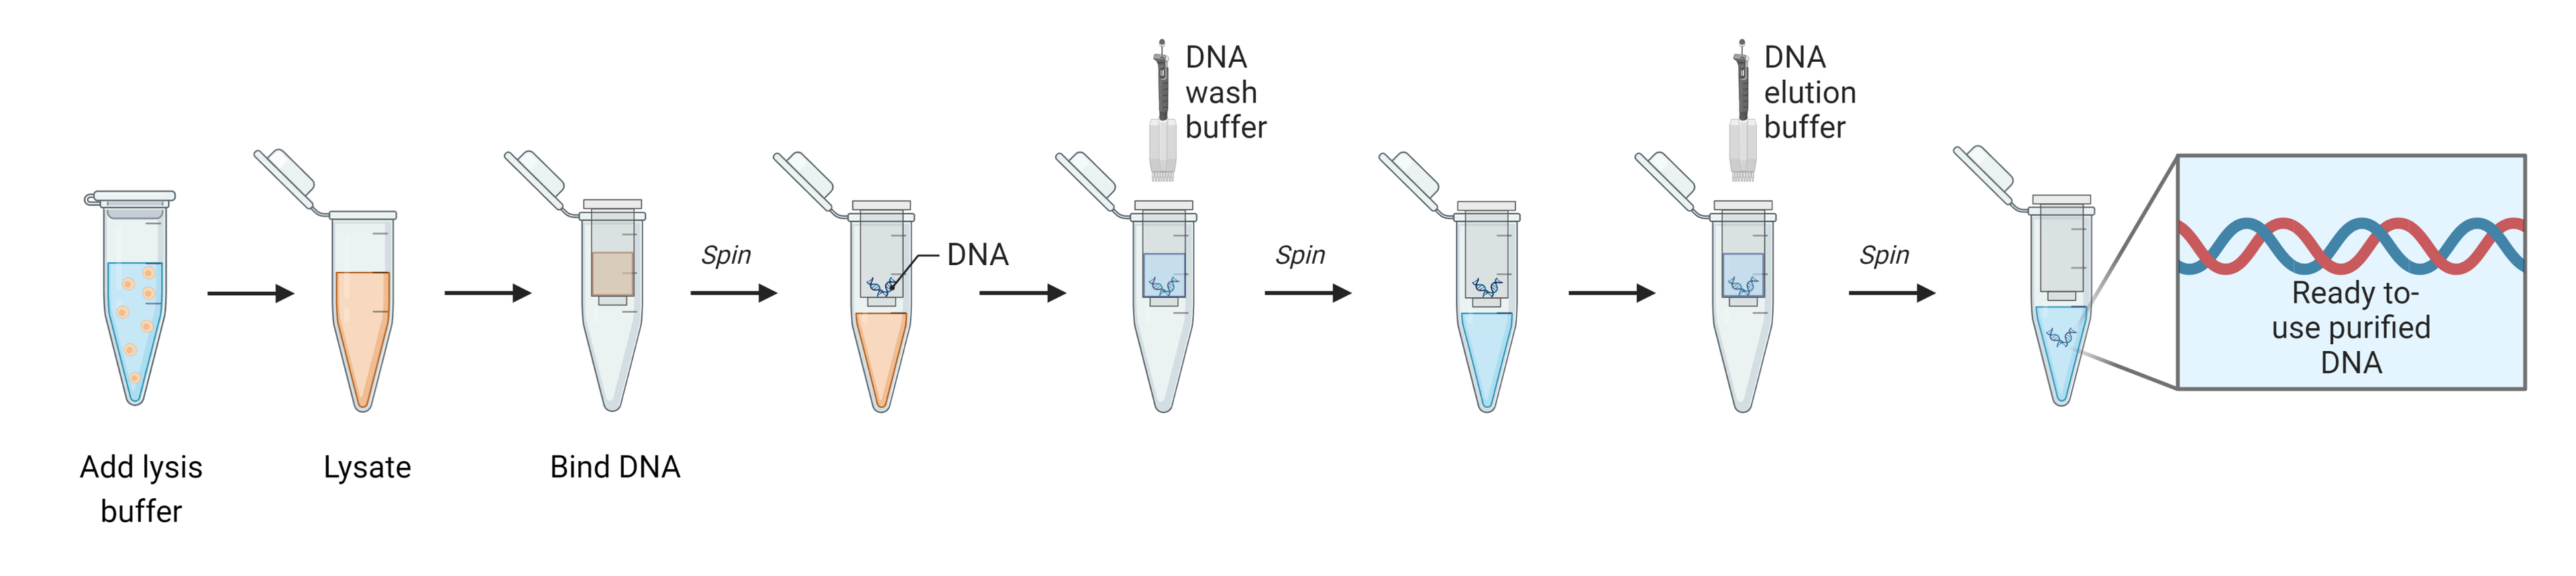 Image?url=https   Images.aatbio.com Universal Newsletter Volume 11 1 Silica Gel DNA Extraction Workflow &w=3840&q=100